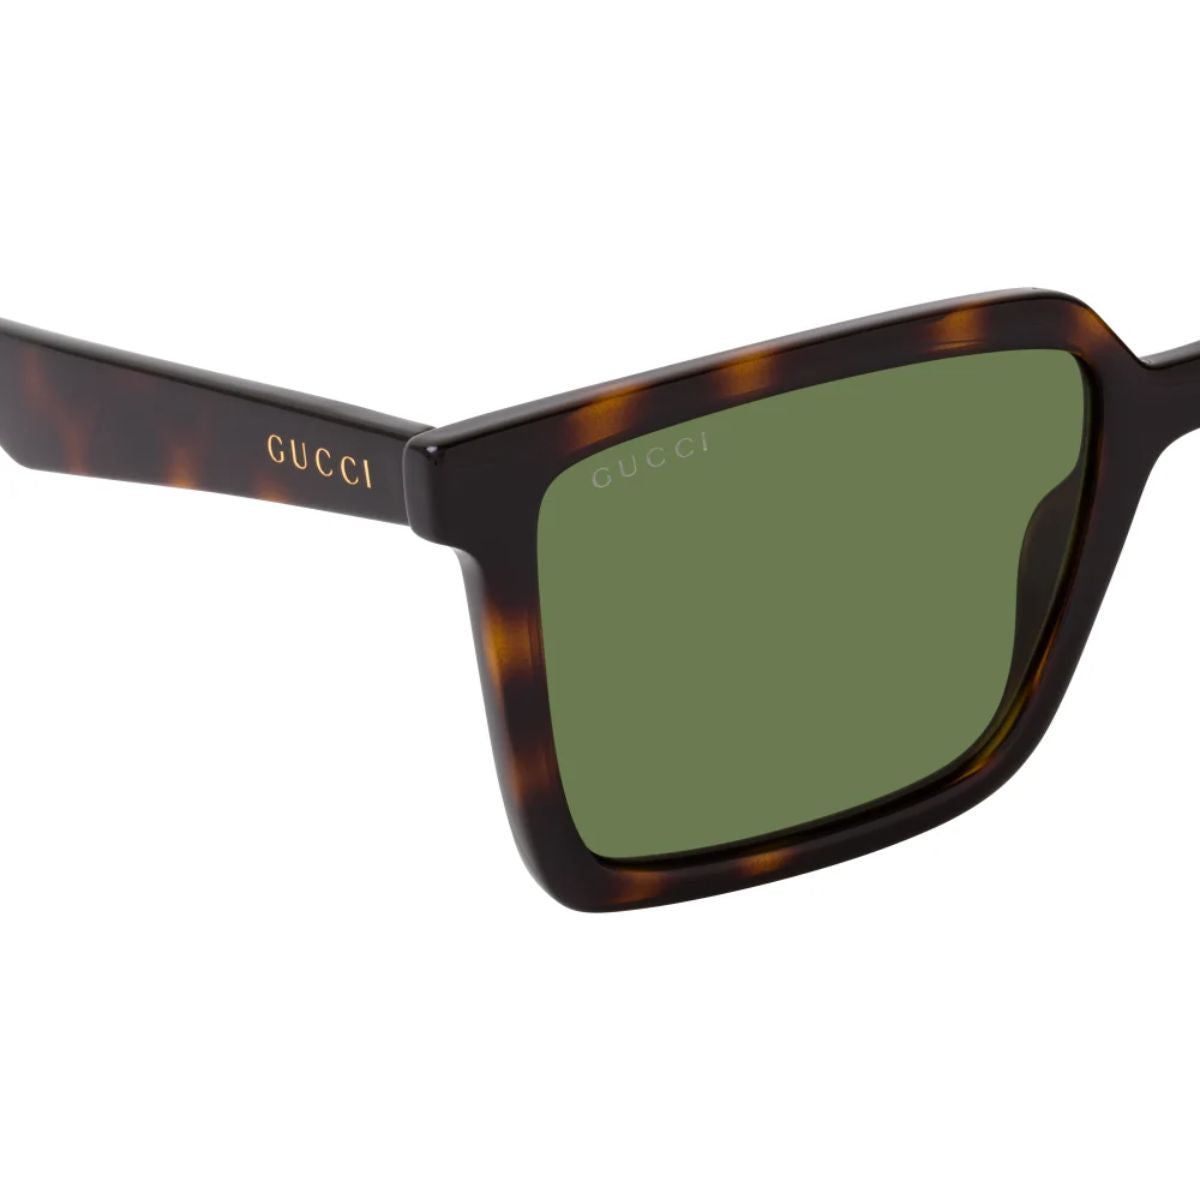 "Gucci Spectacles: Shop the Trendiest 1540S 002 Sunglasses for Men at Optorium"